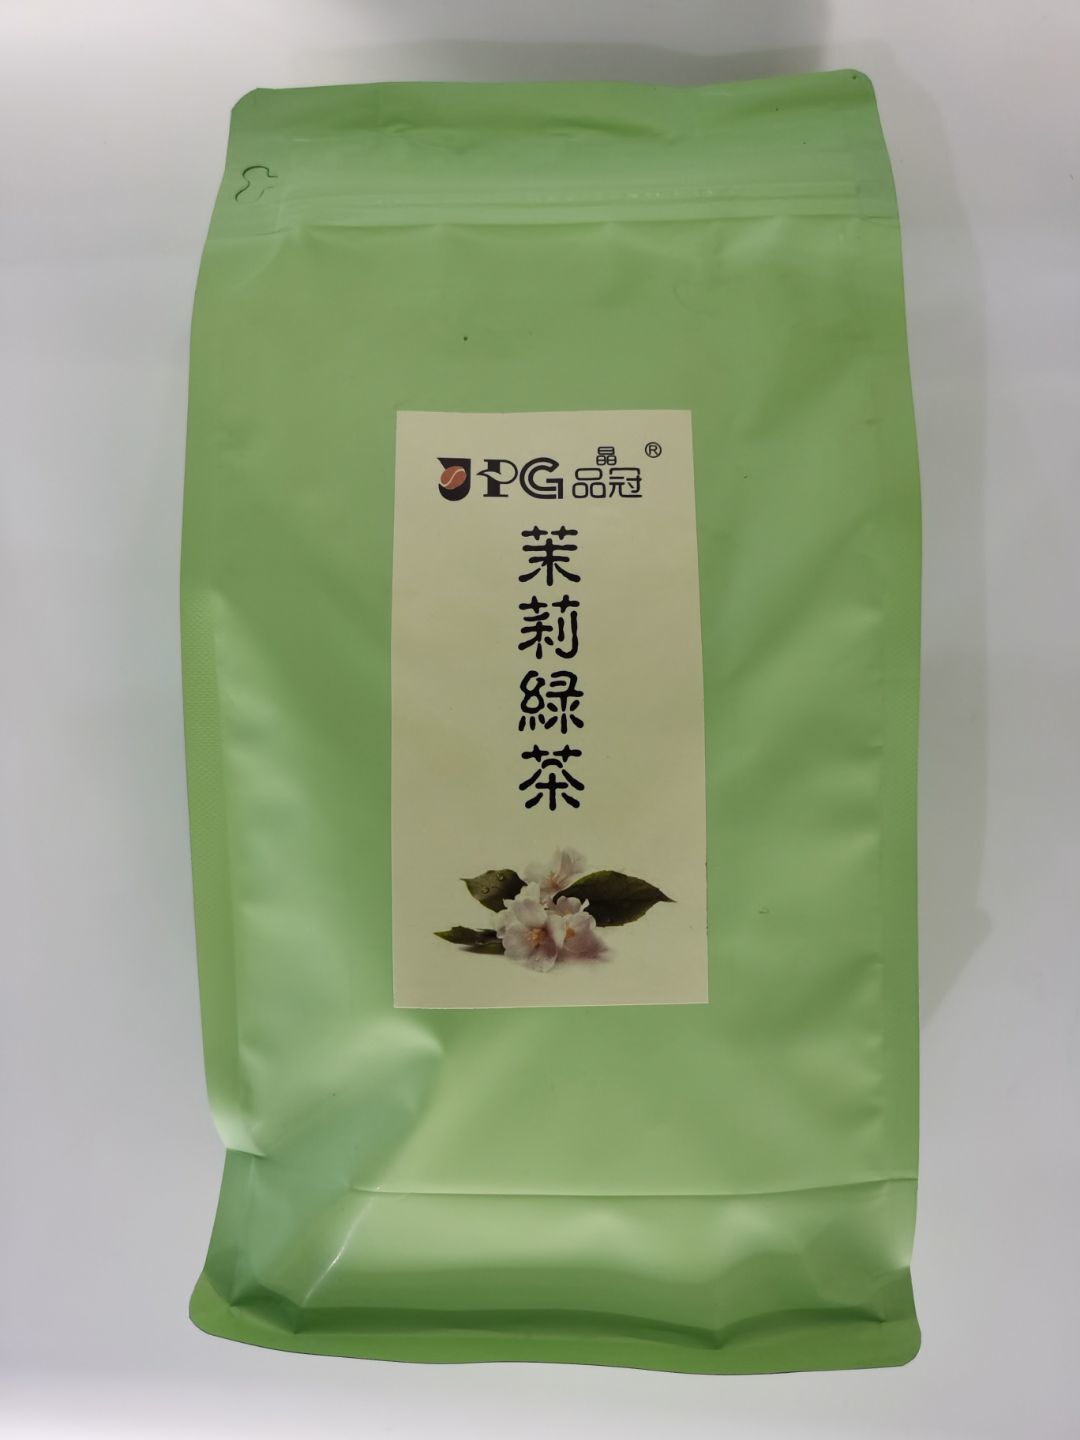 046drinks Jingping Guang Jasmine Green Tea